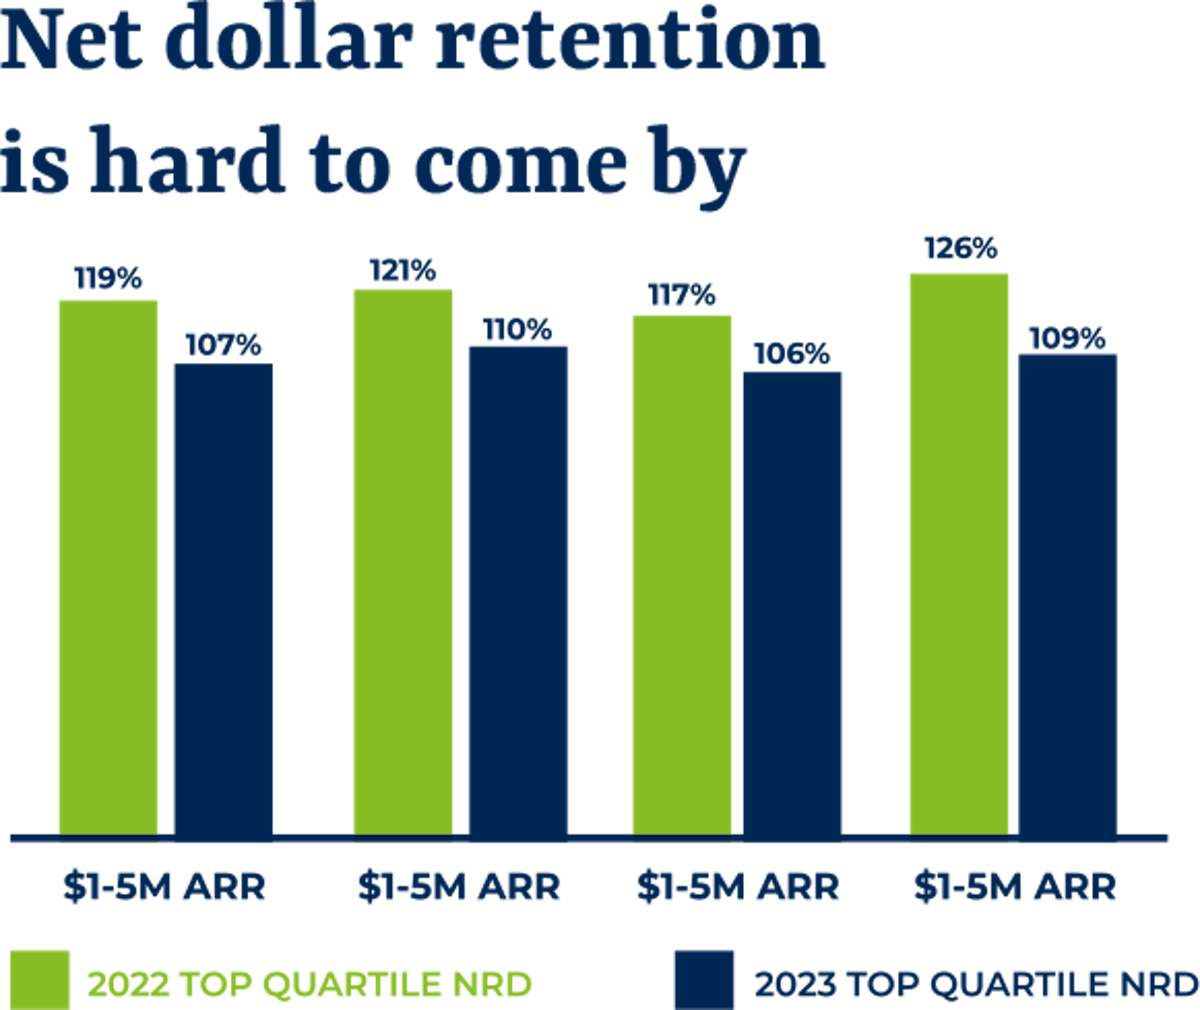 Net dollar retention graph